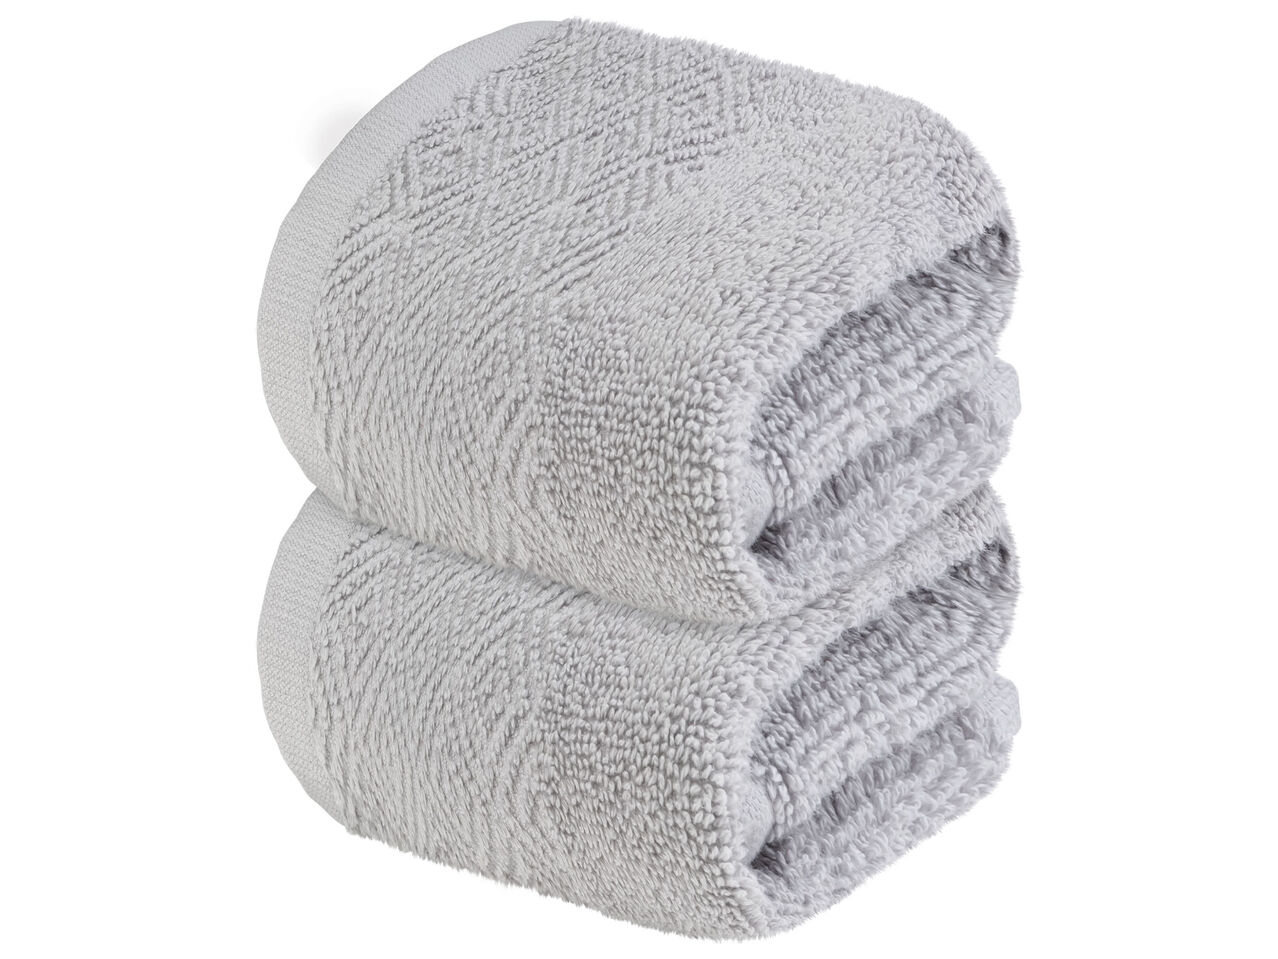 LIVARNO HOME® Ręcznik frotté 30 x 50, 2 szt.* , cena 4,99 PLN 
LIVARNO HOME® ...